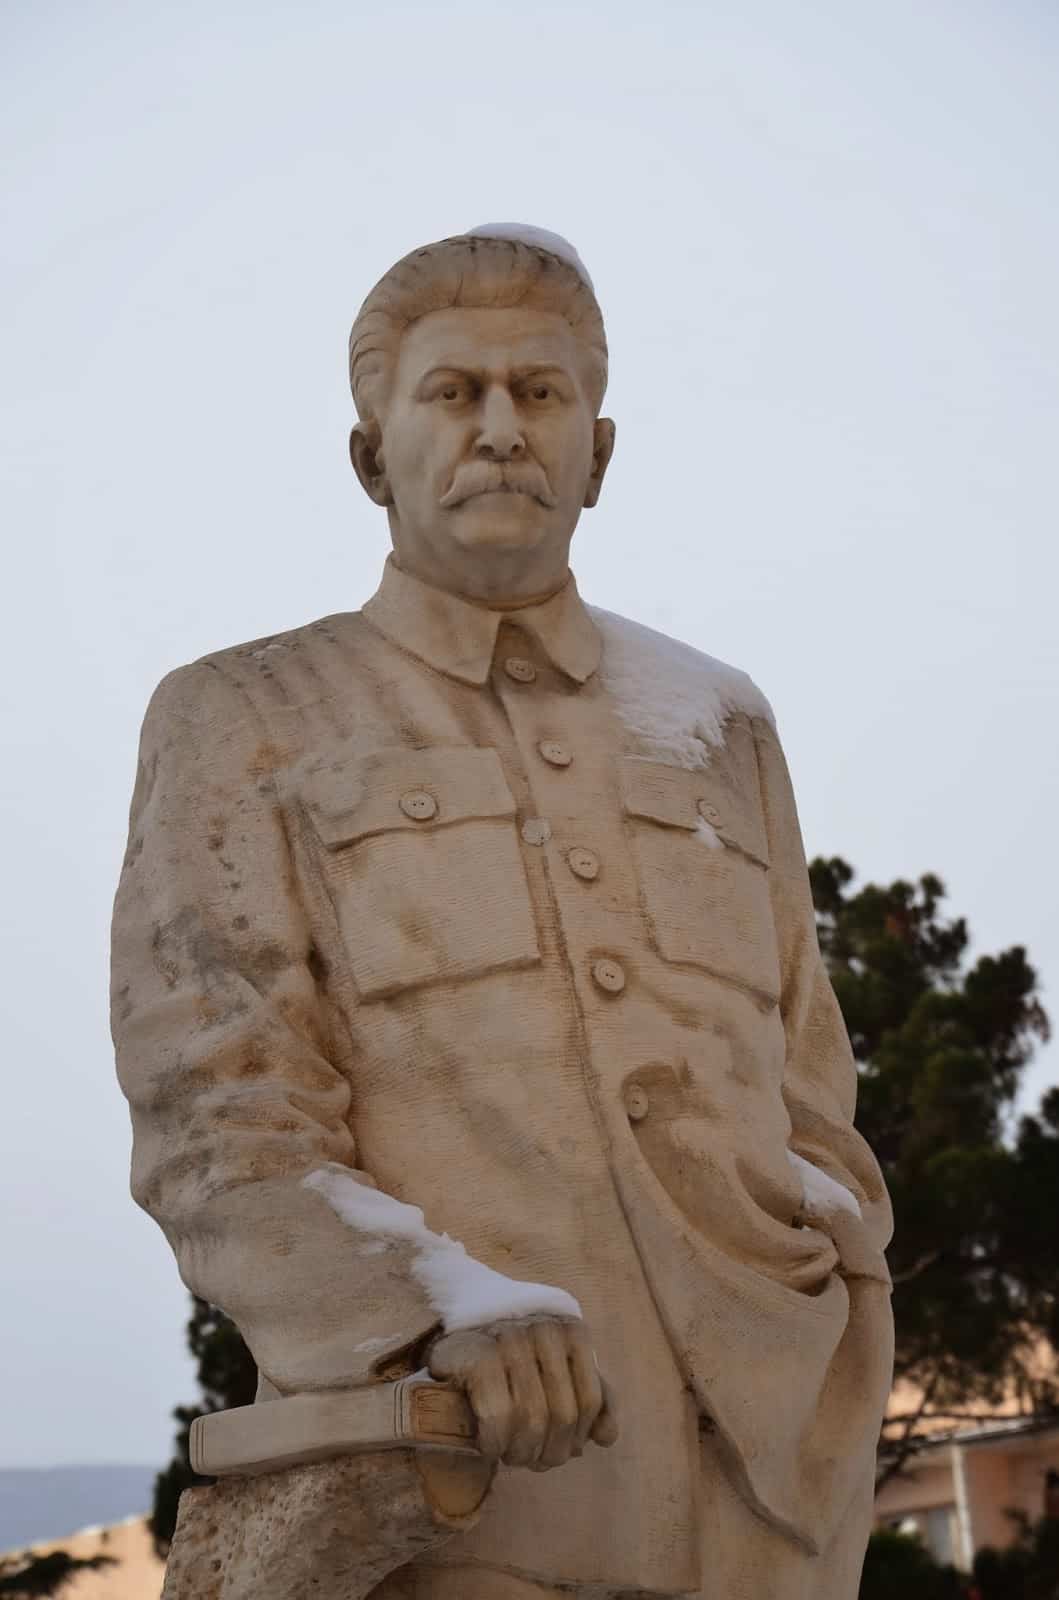 Stalin statue at the Joseph Stalin Museum in Gori, Georgia